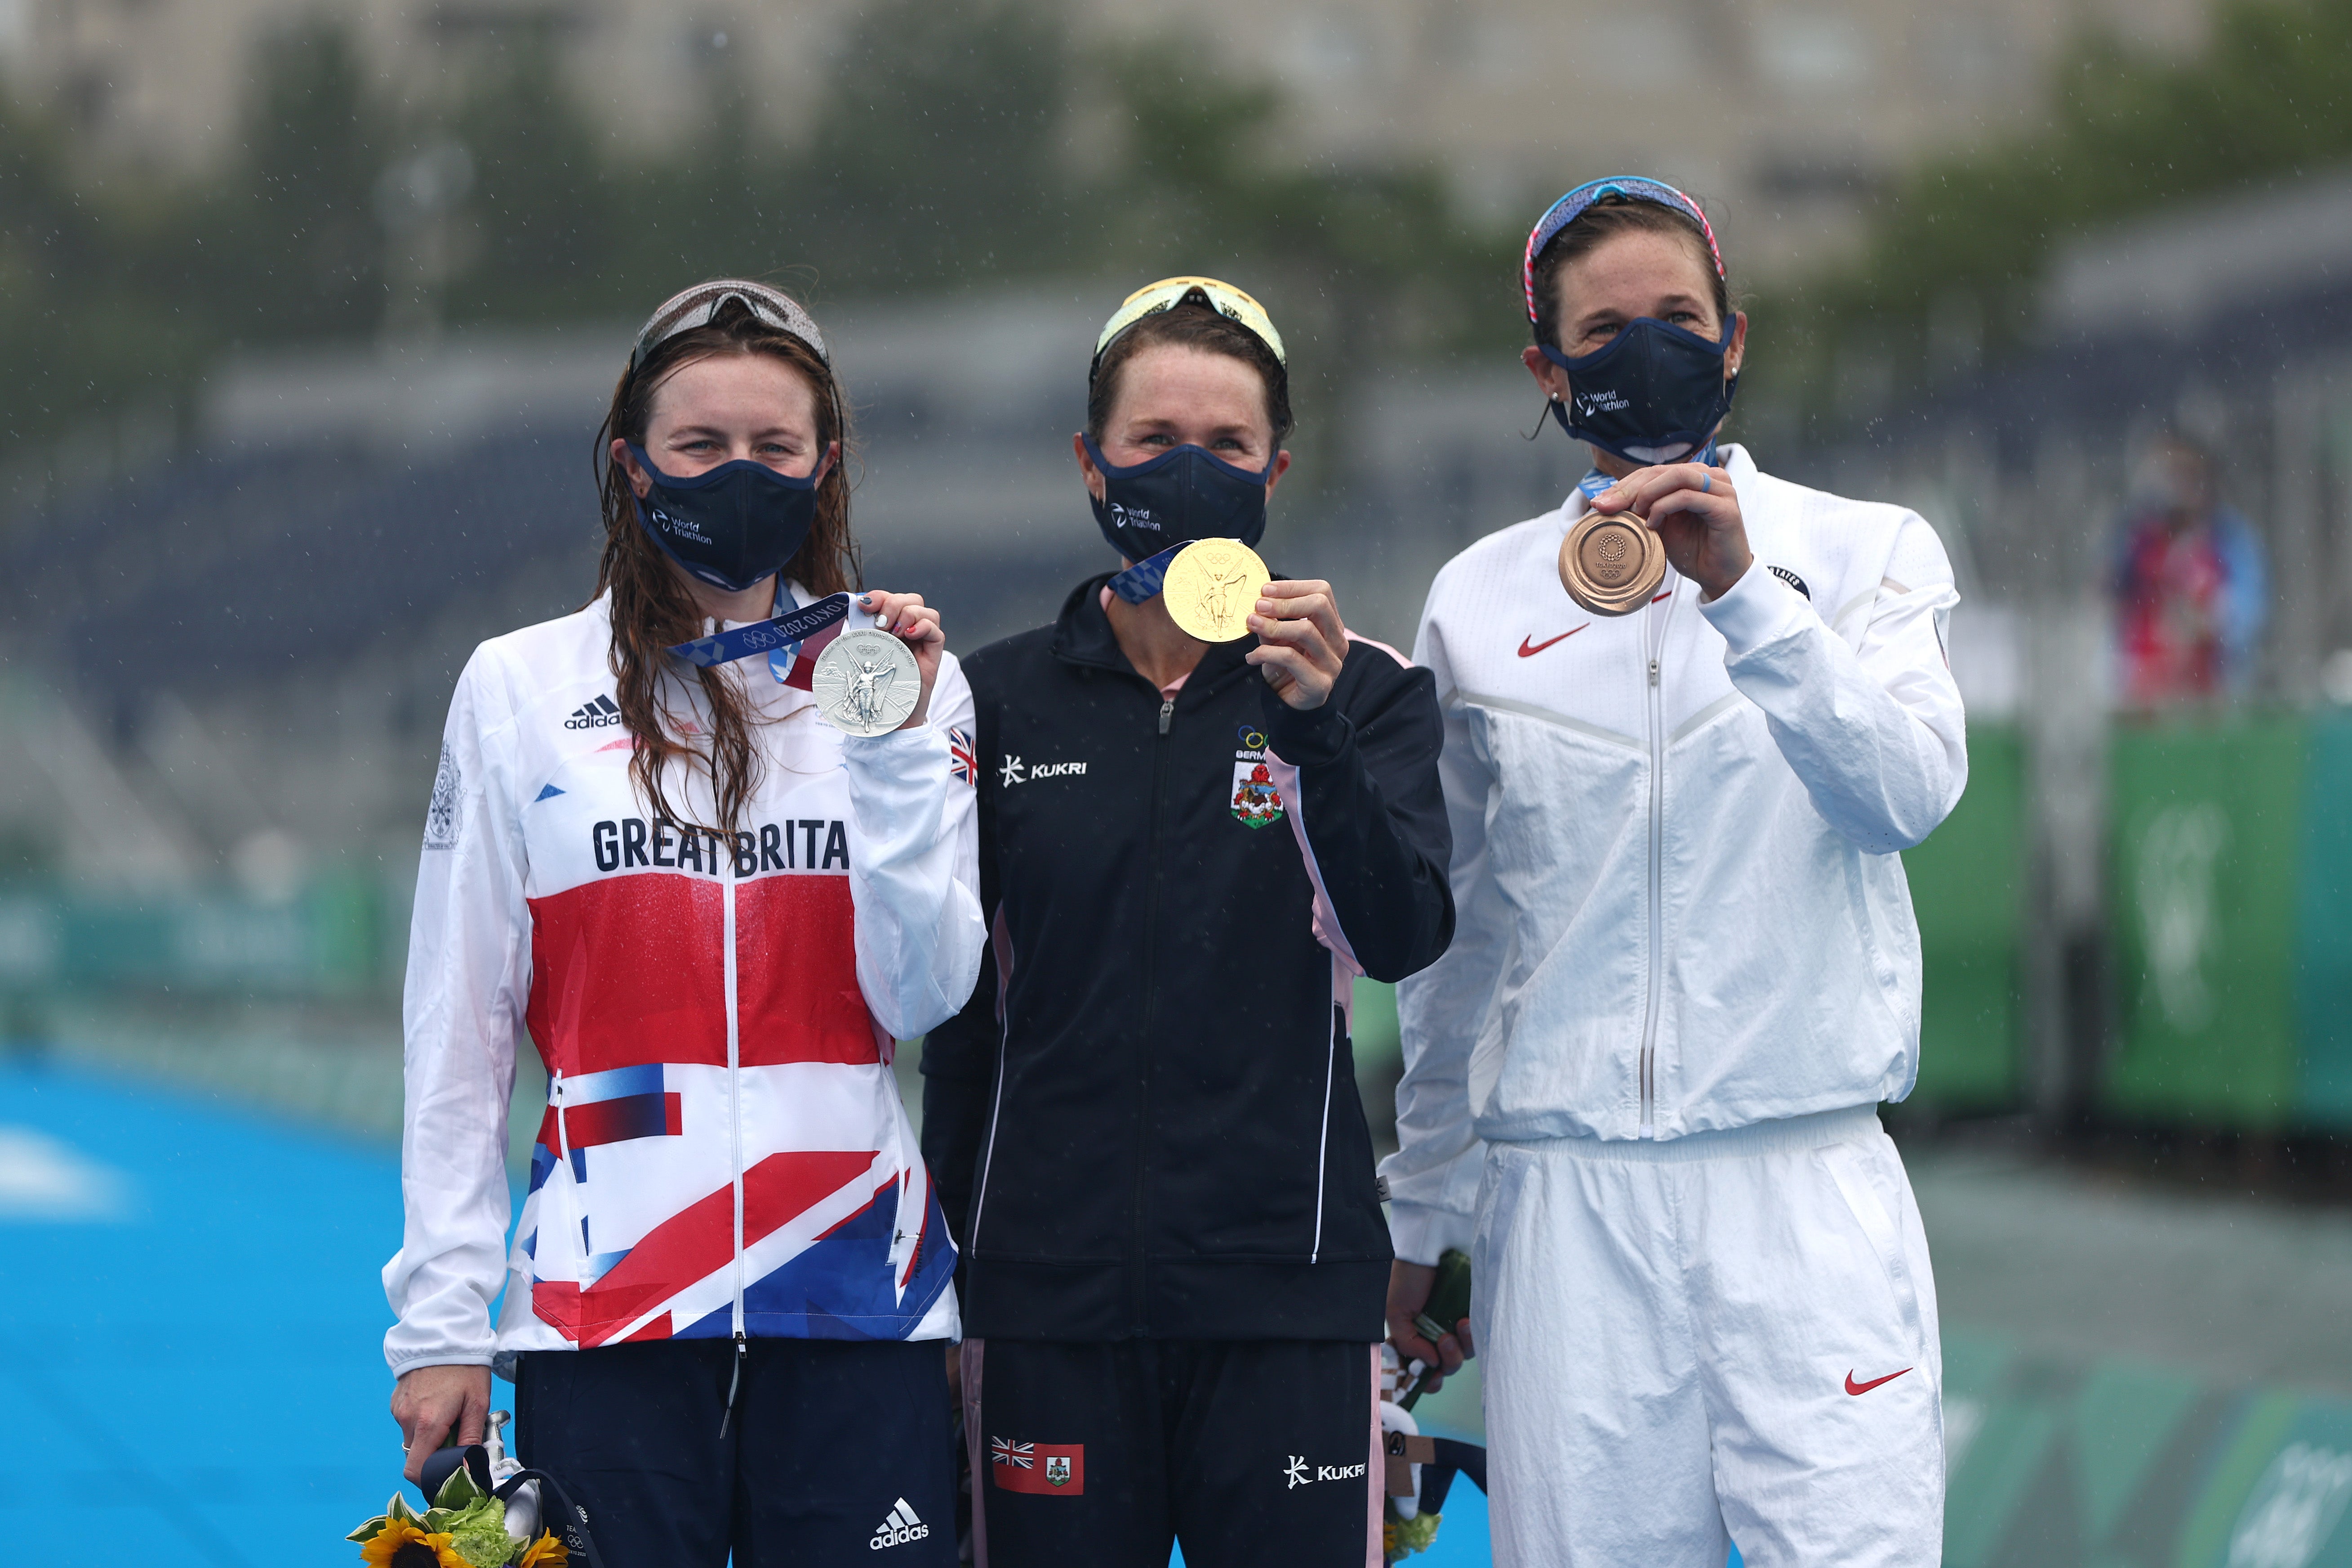 Flora Duffy won triathlon gold at Tokyo 2020 ahead of Georgia Taylor-Brown